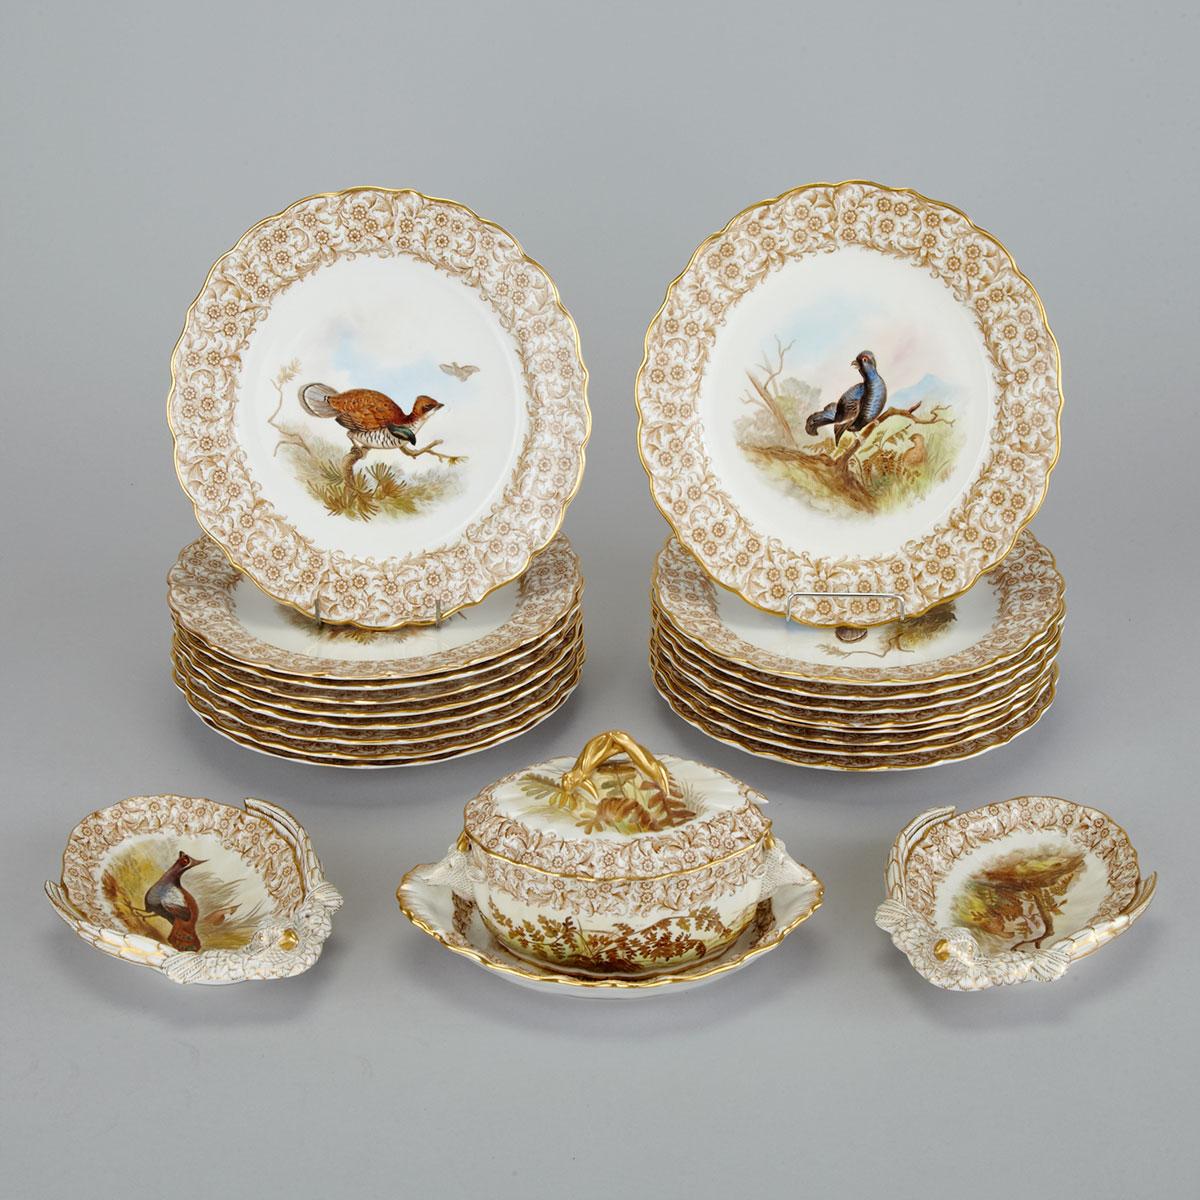 Royal Worcester Vitreous Porcelain Game Service, c.1890